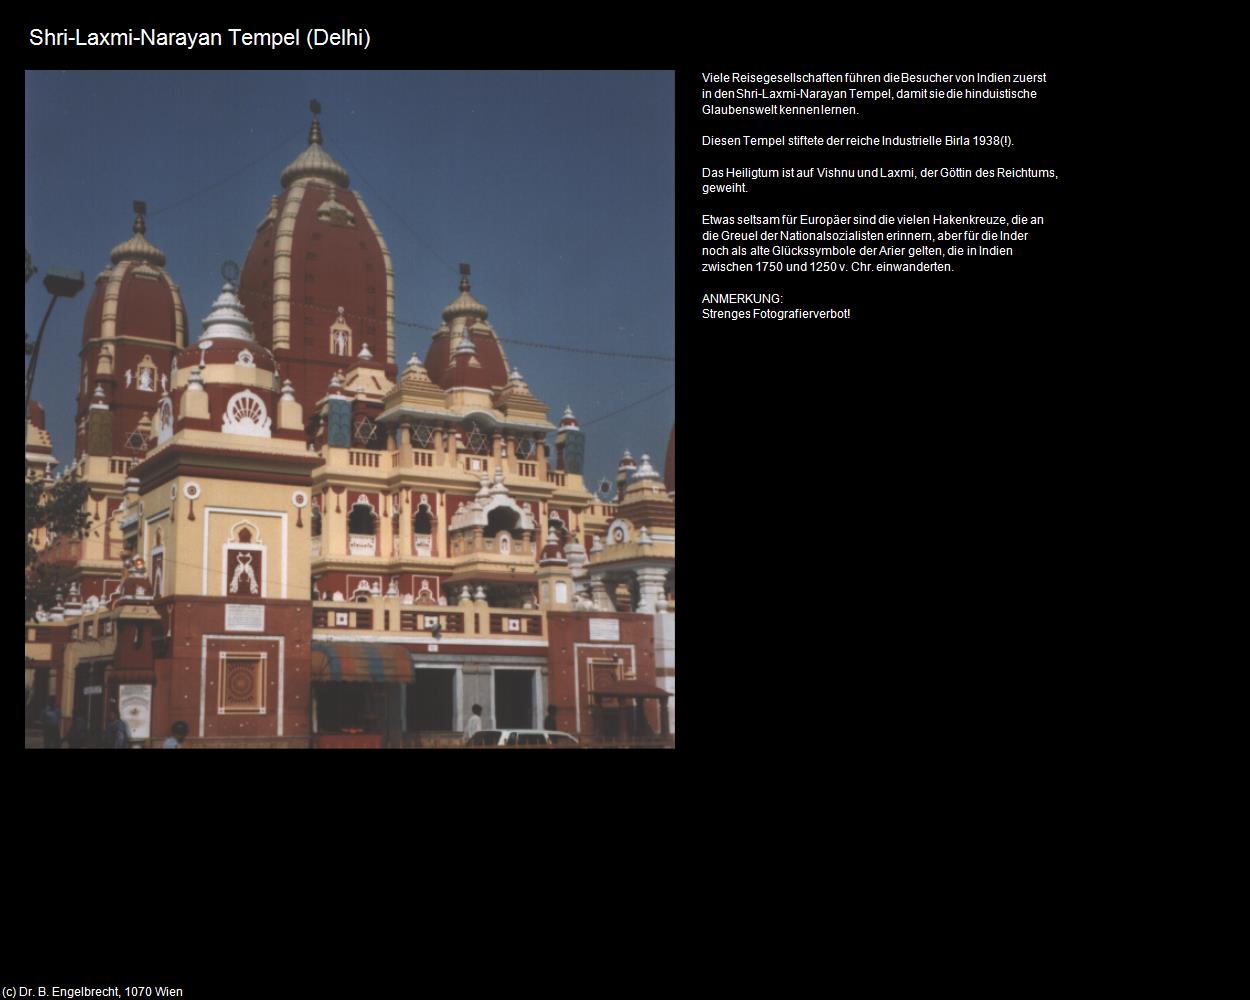 Shri-Laxmi-Narayan Tempel (Delhi) in Rajasthan - das Land der Könige